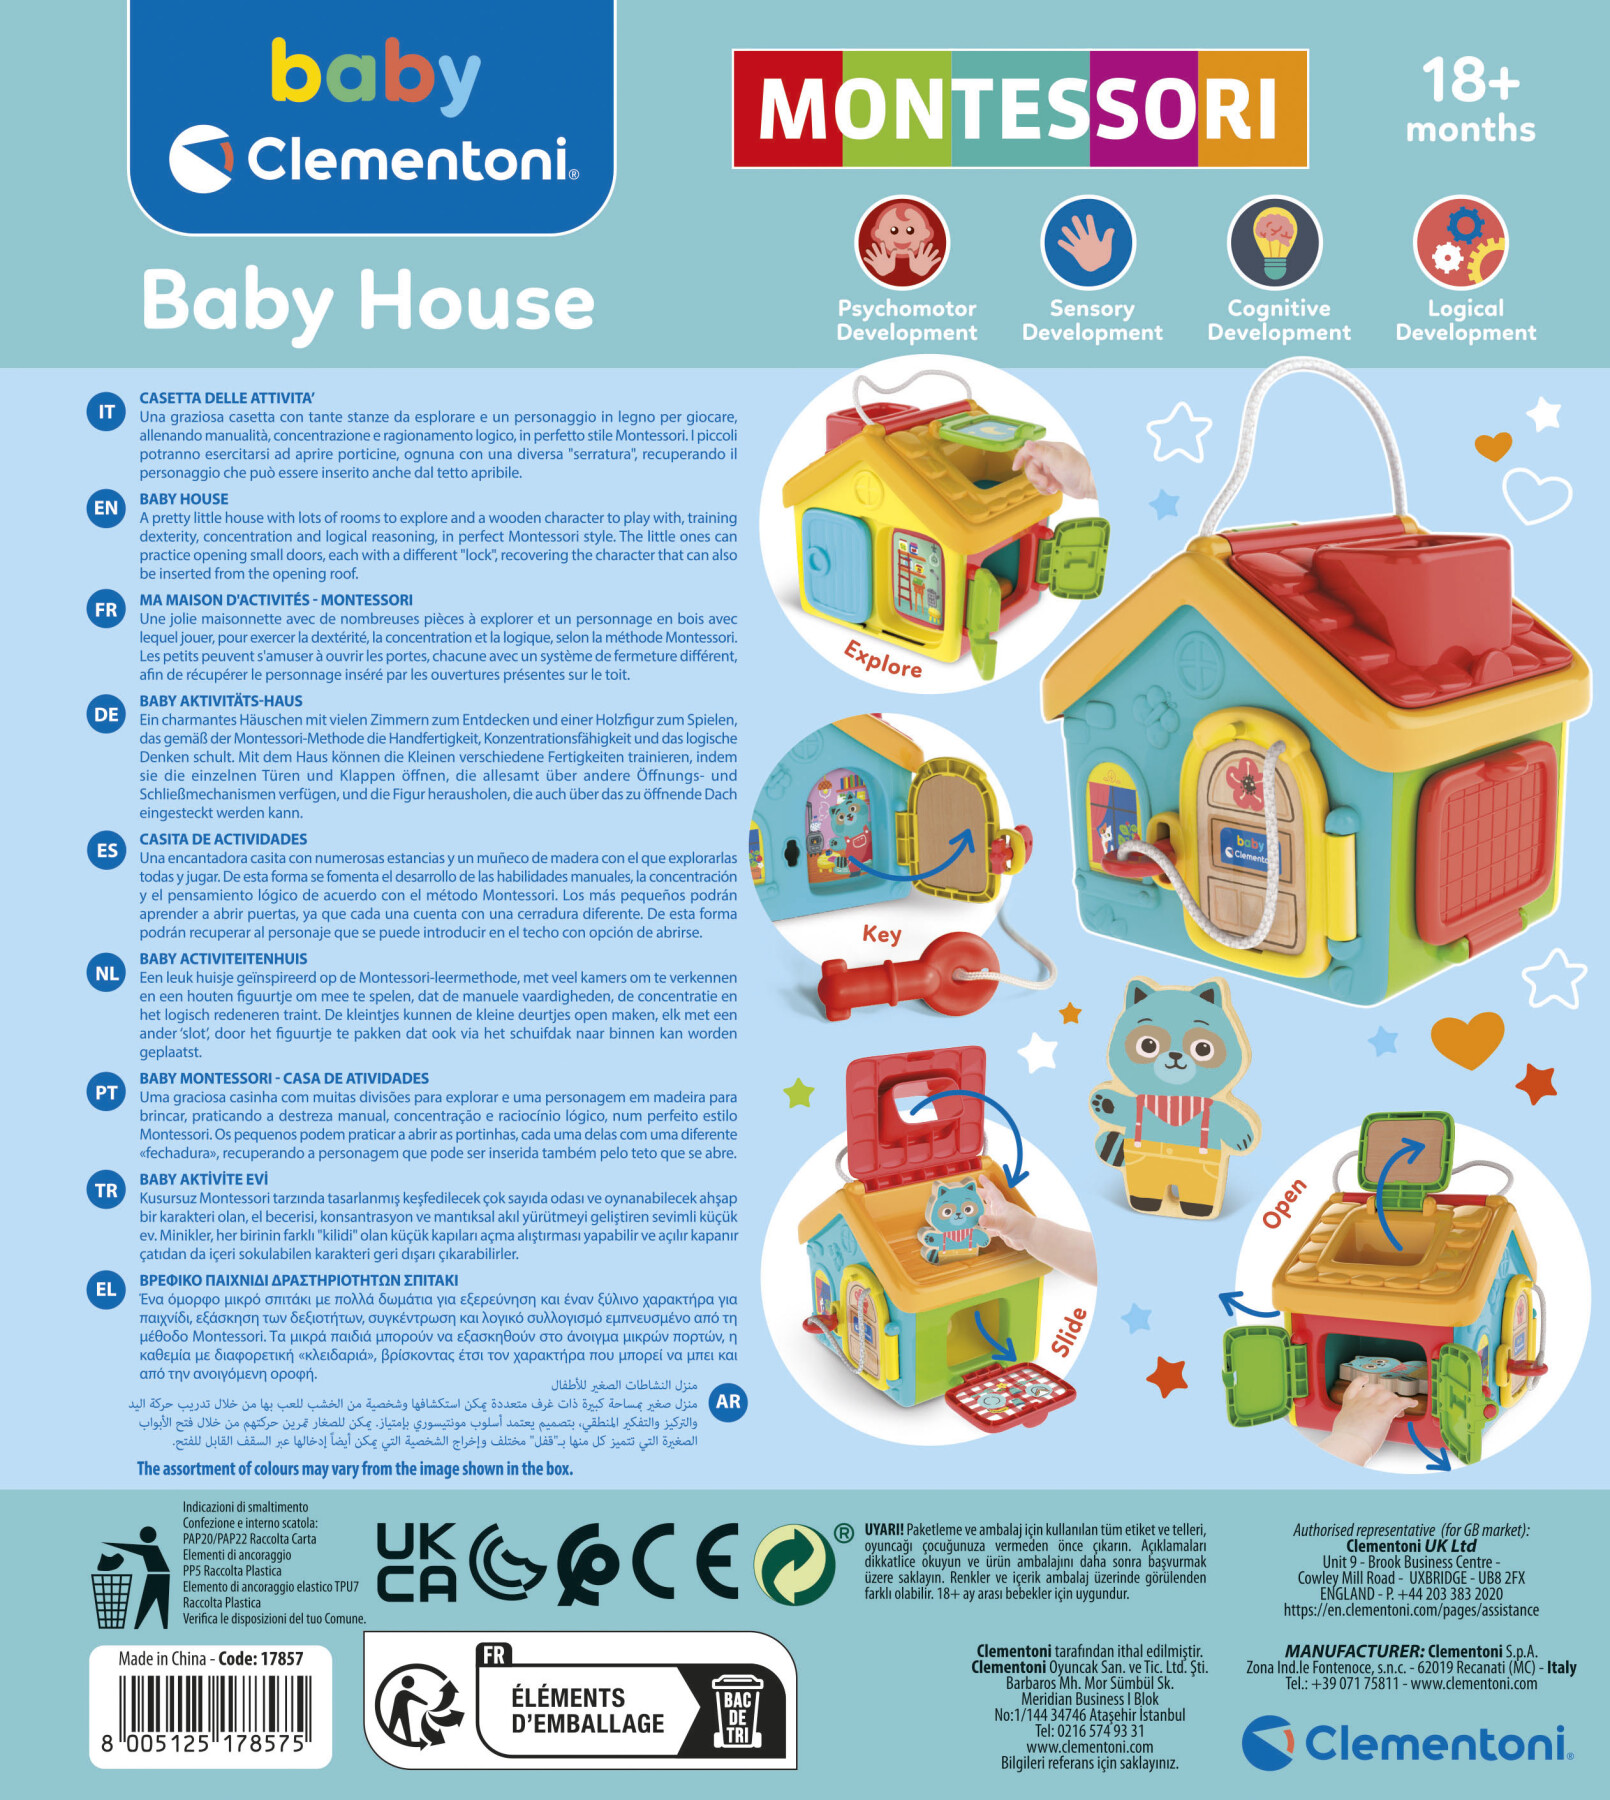 Baby clementoni montessori baby house - BABY CLEMENTONI